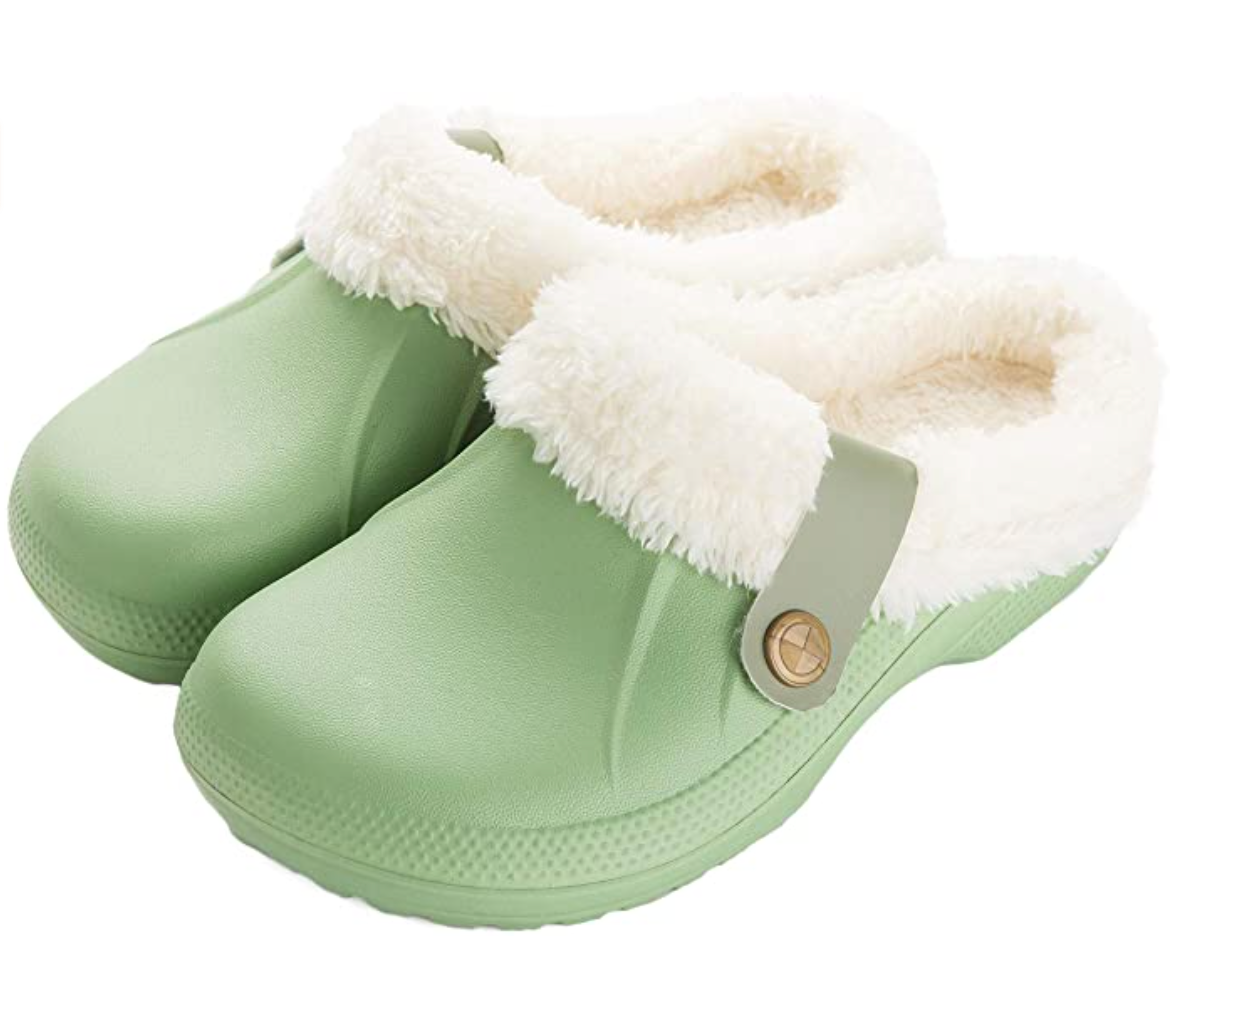 Mens Fur Lined Garden Clogs Slip On Winter Warm Work Sandals Sandals Slippers 